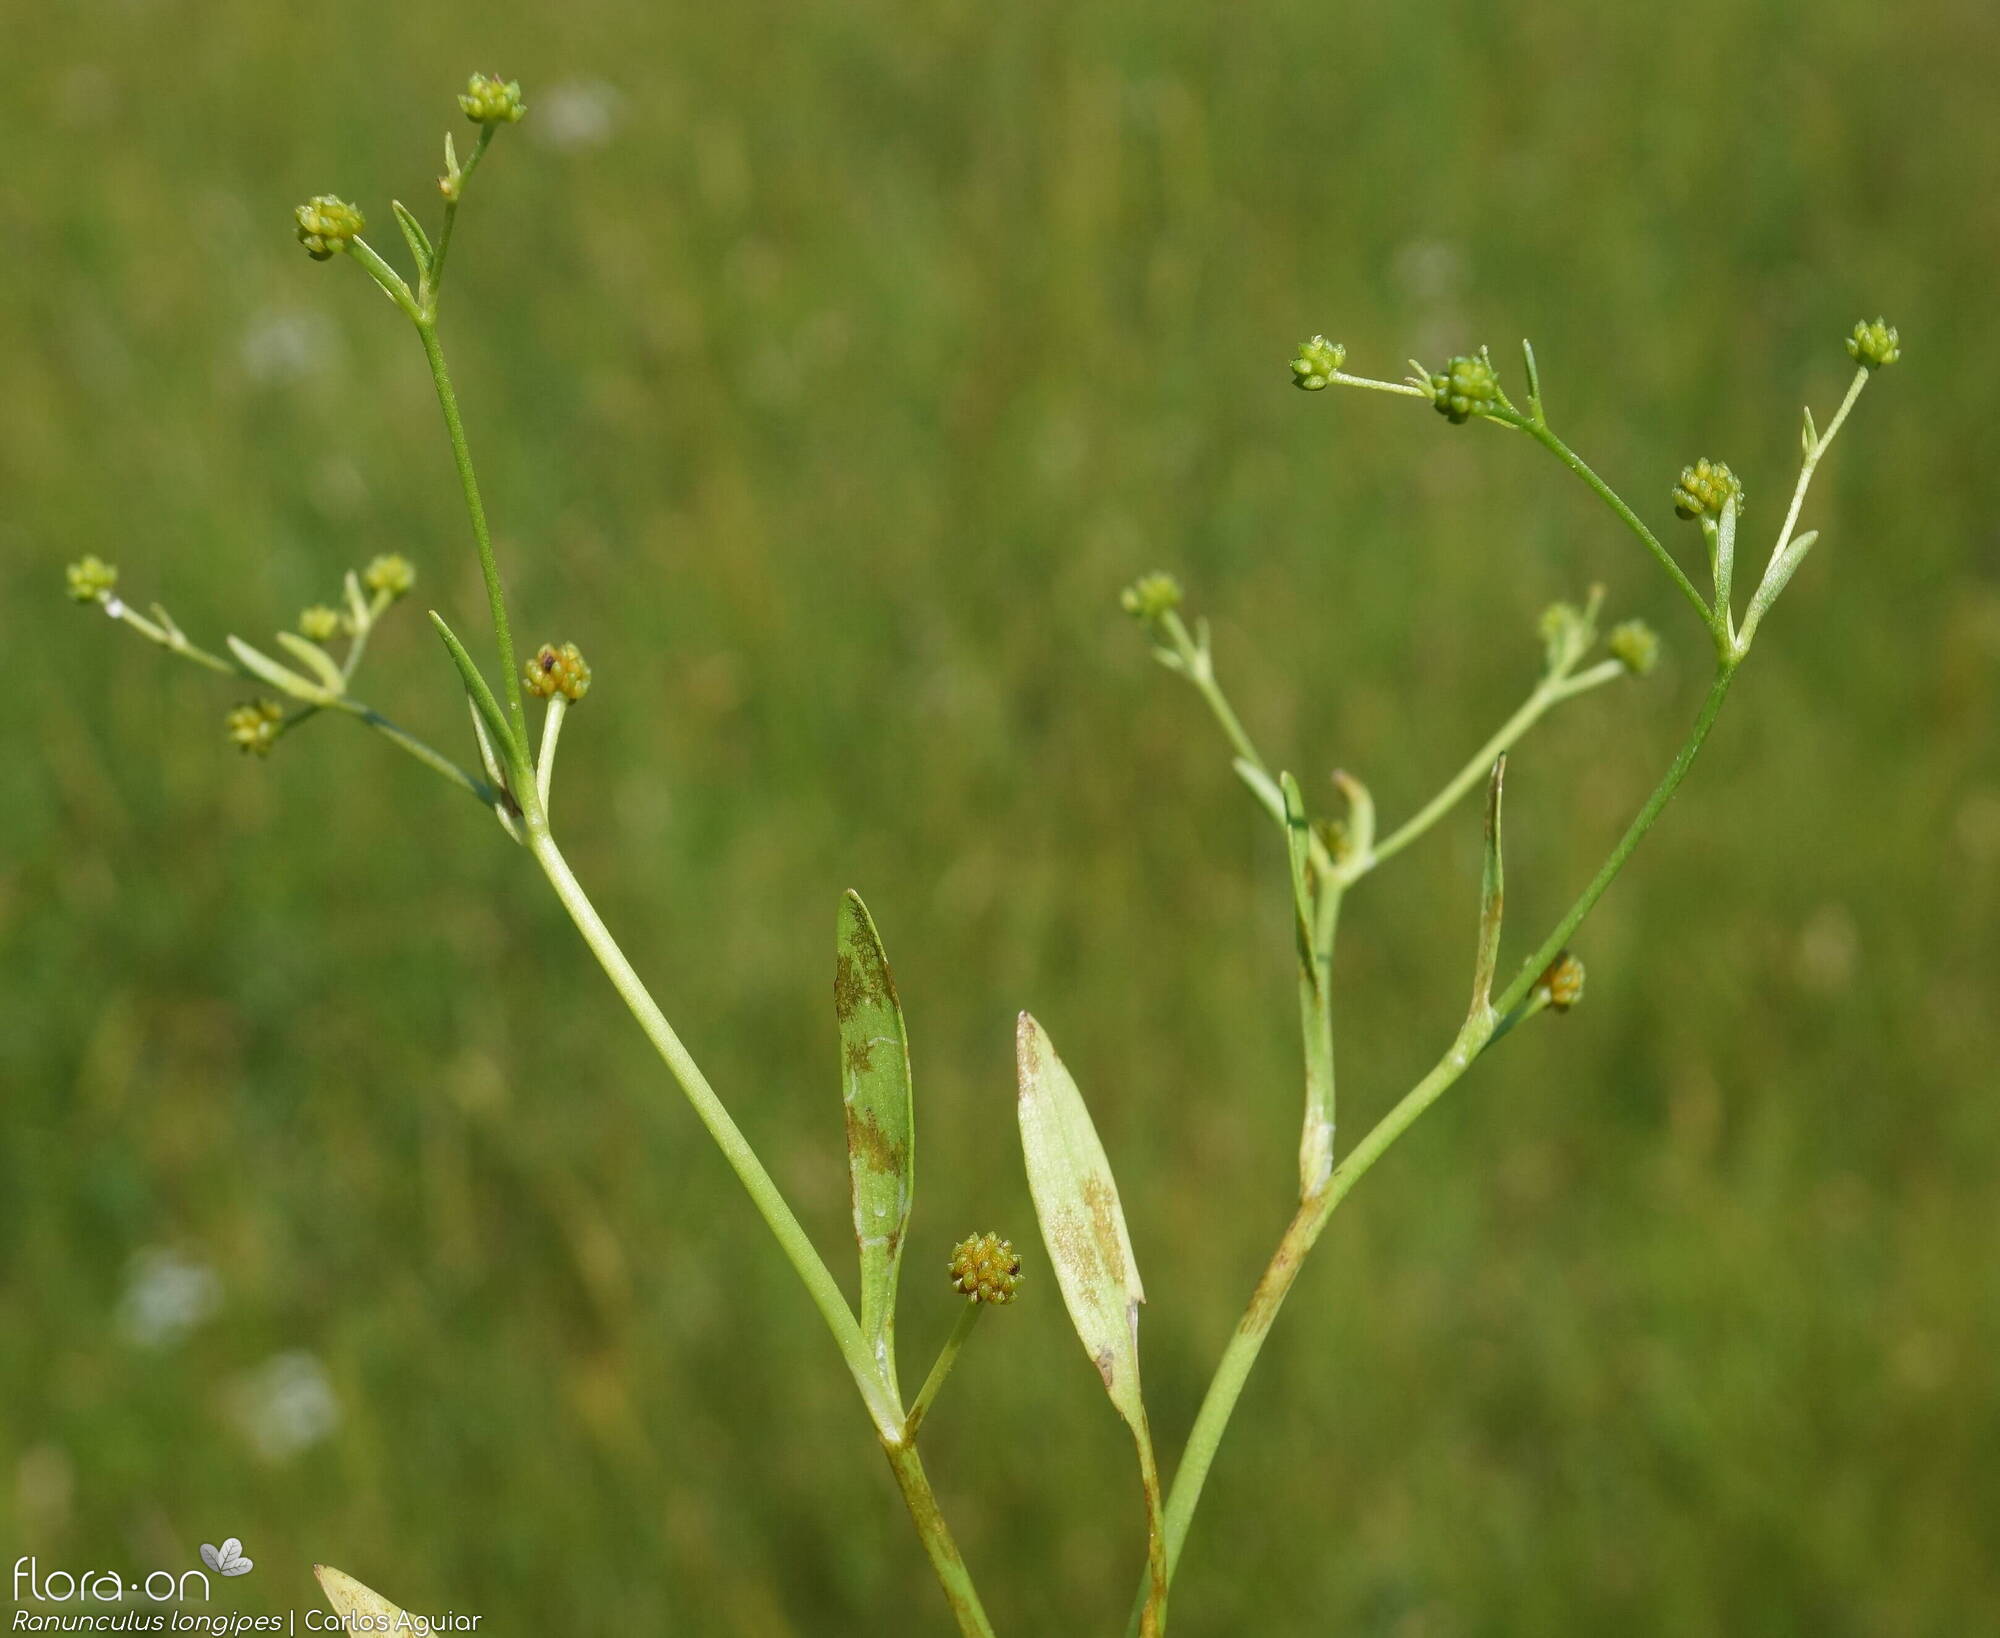 Ranunculus longipes - Hábito | Carlos Aguiar; CC BY-NC 4.0